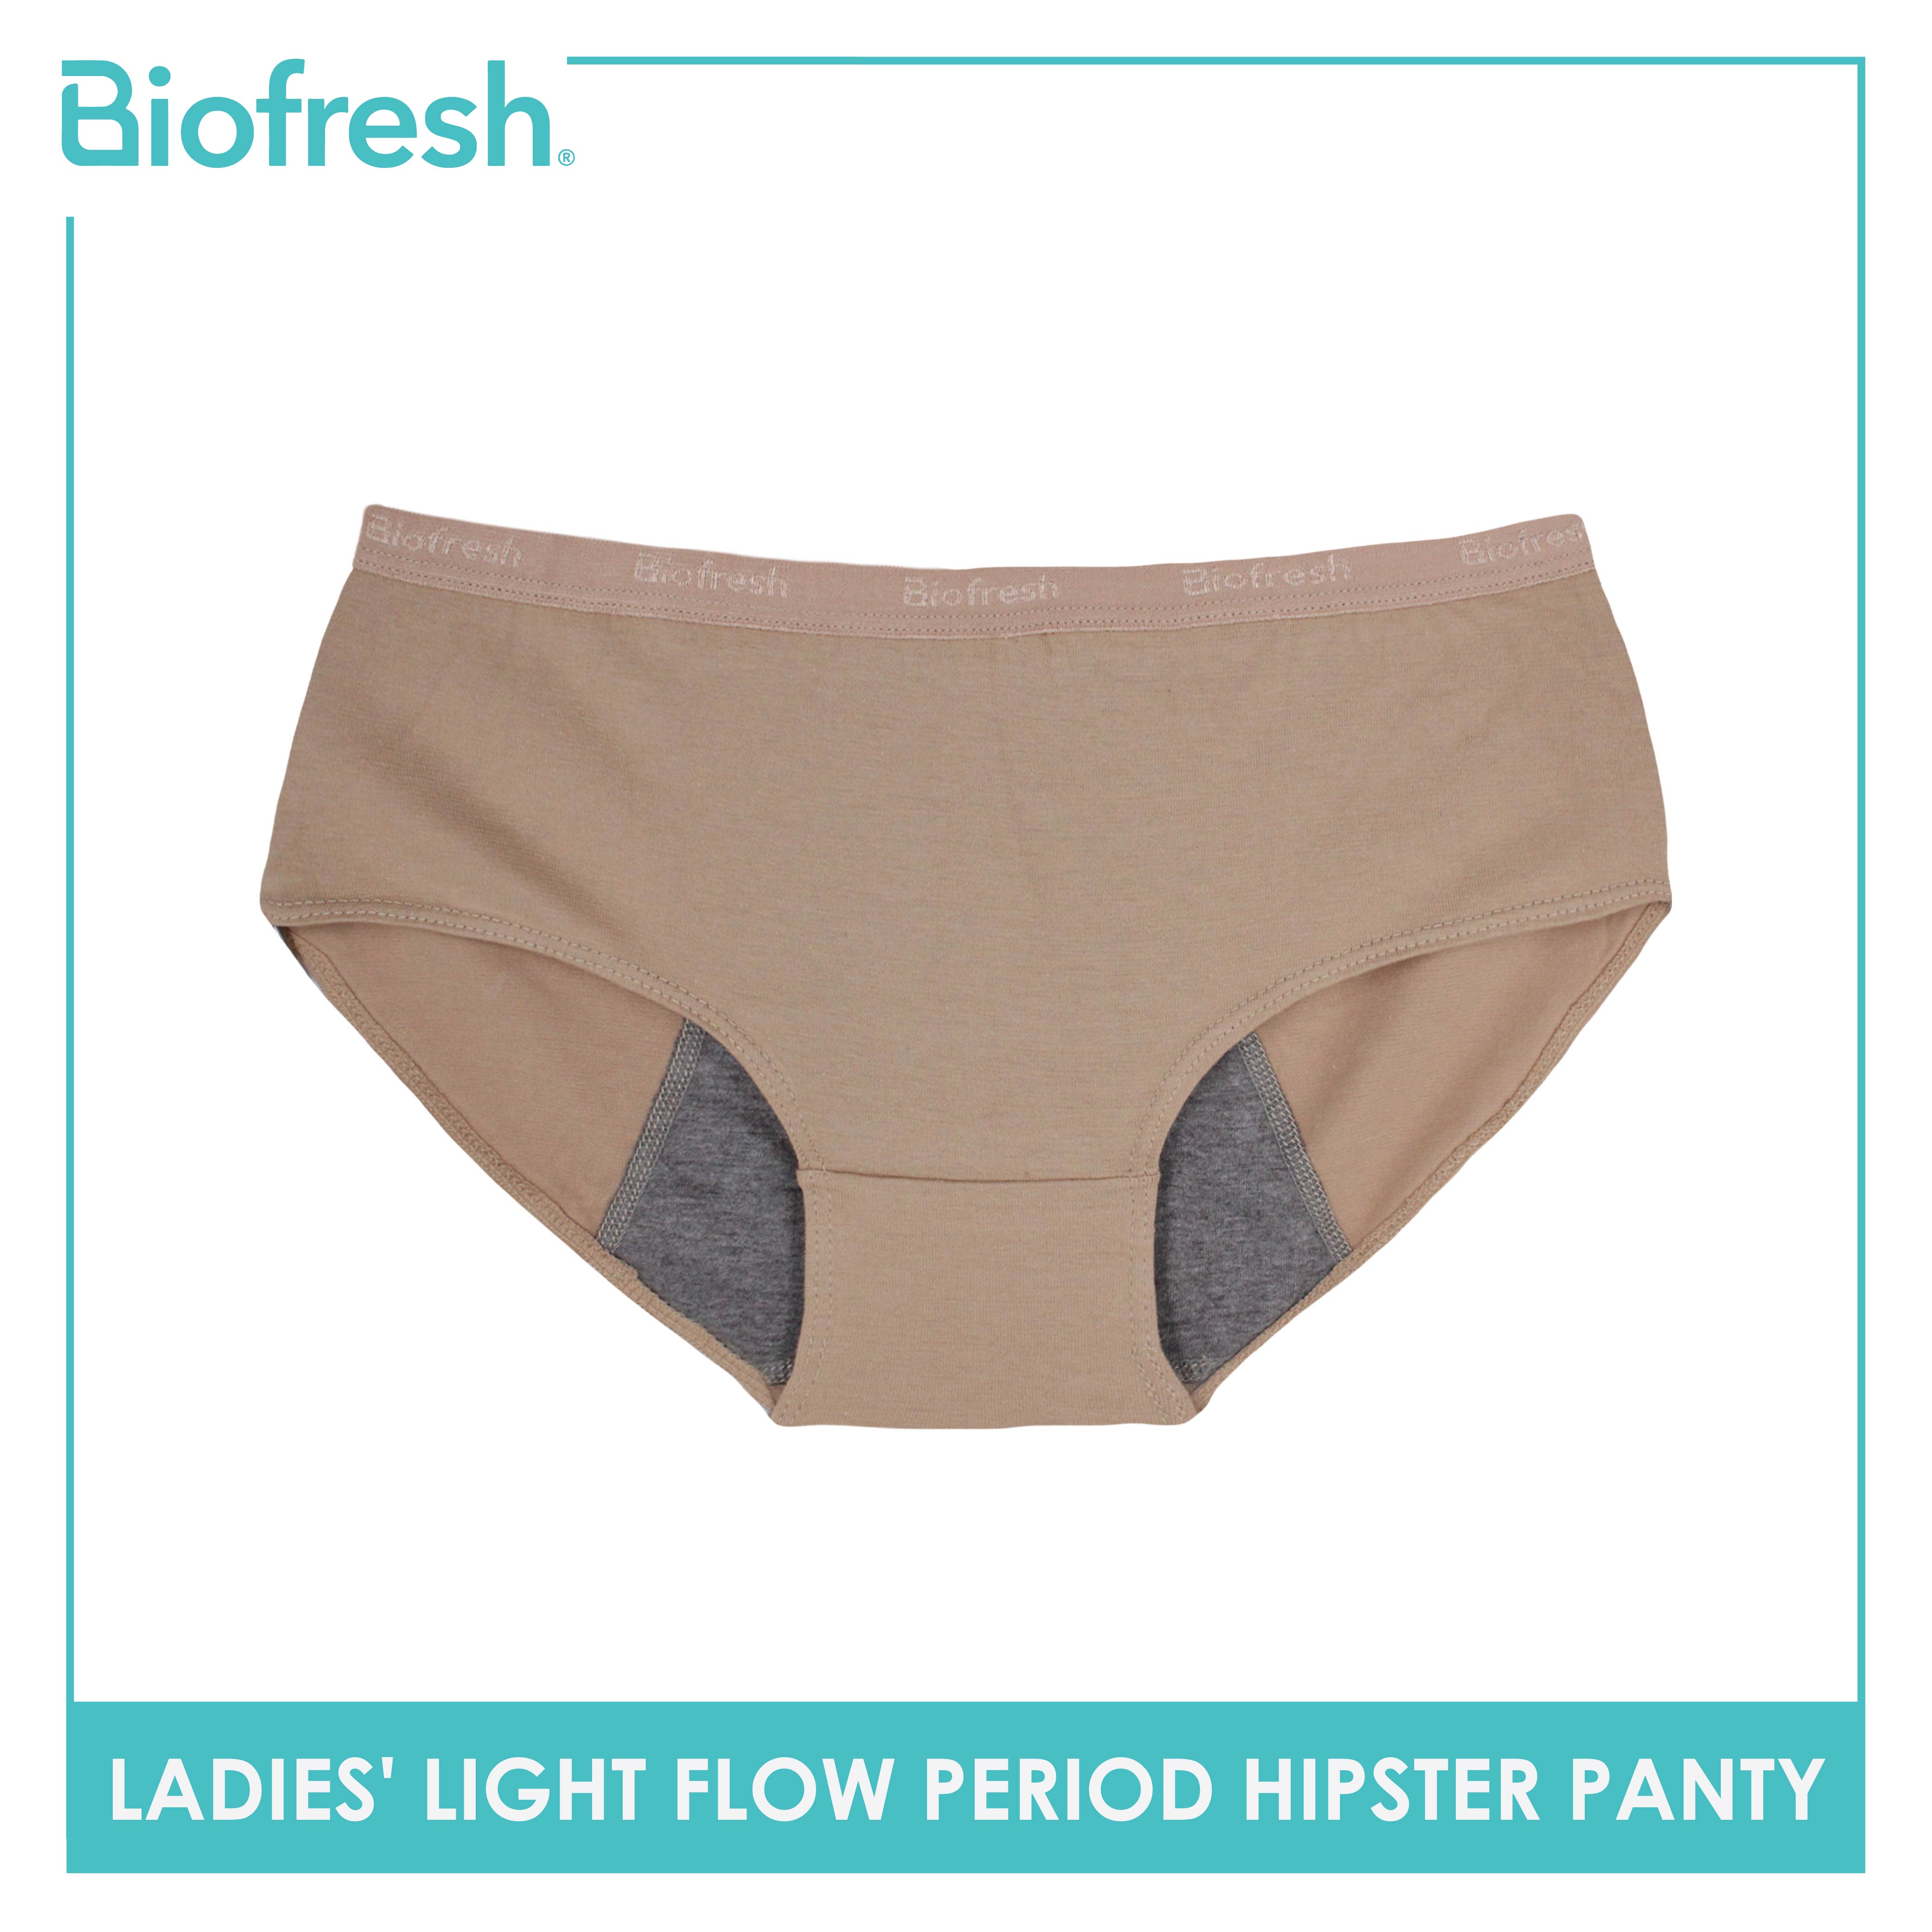  Women Period Underwear Leak Proof Menstrual Panties